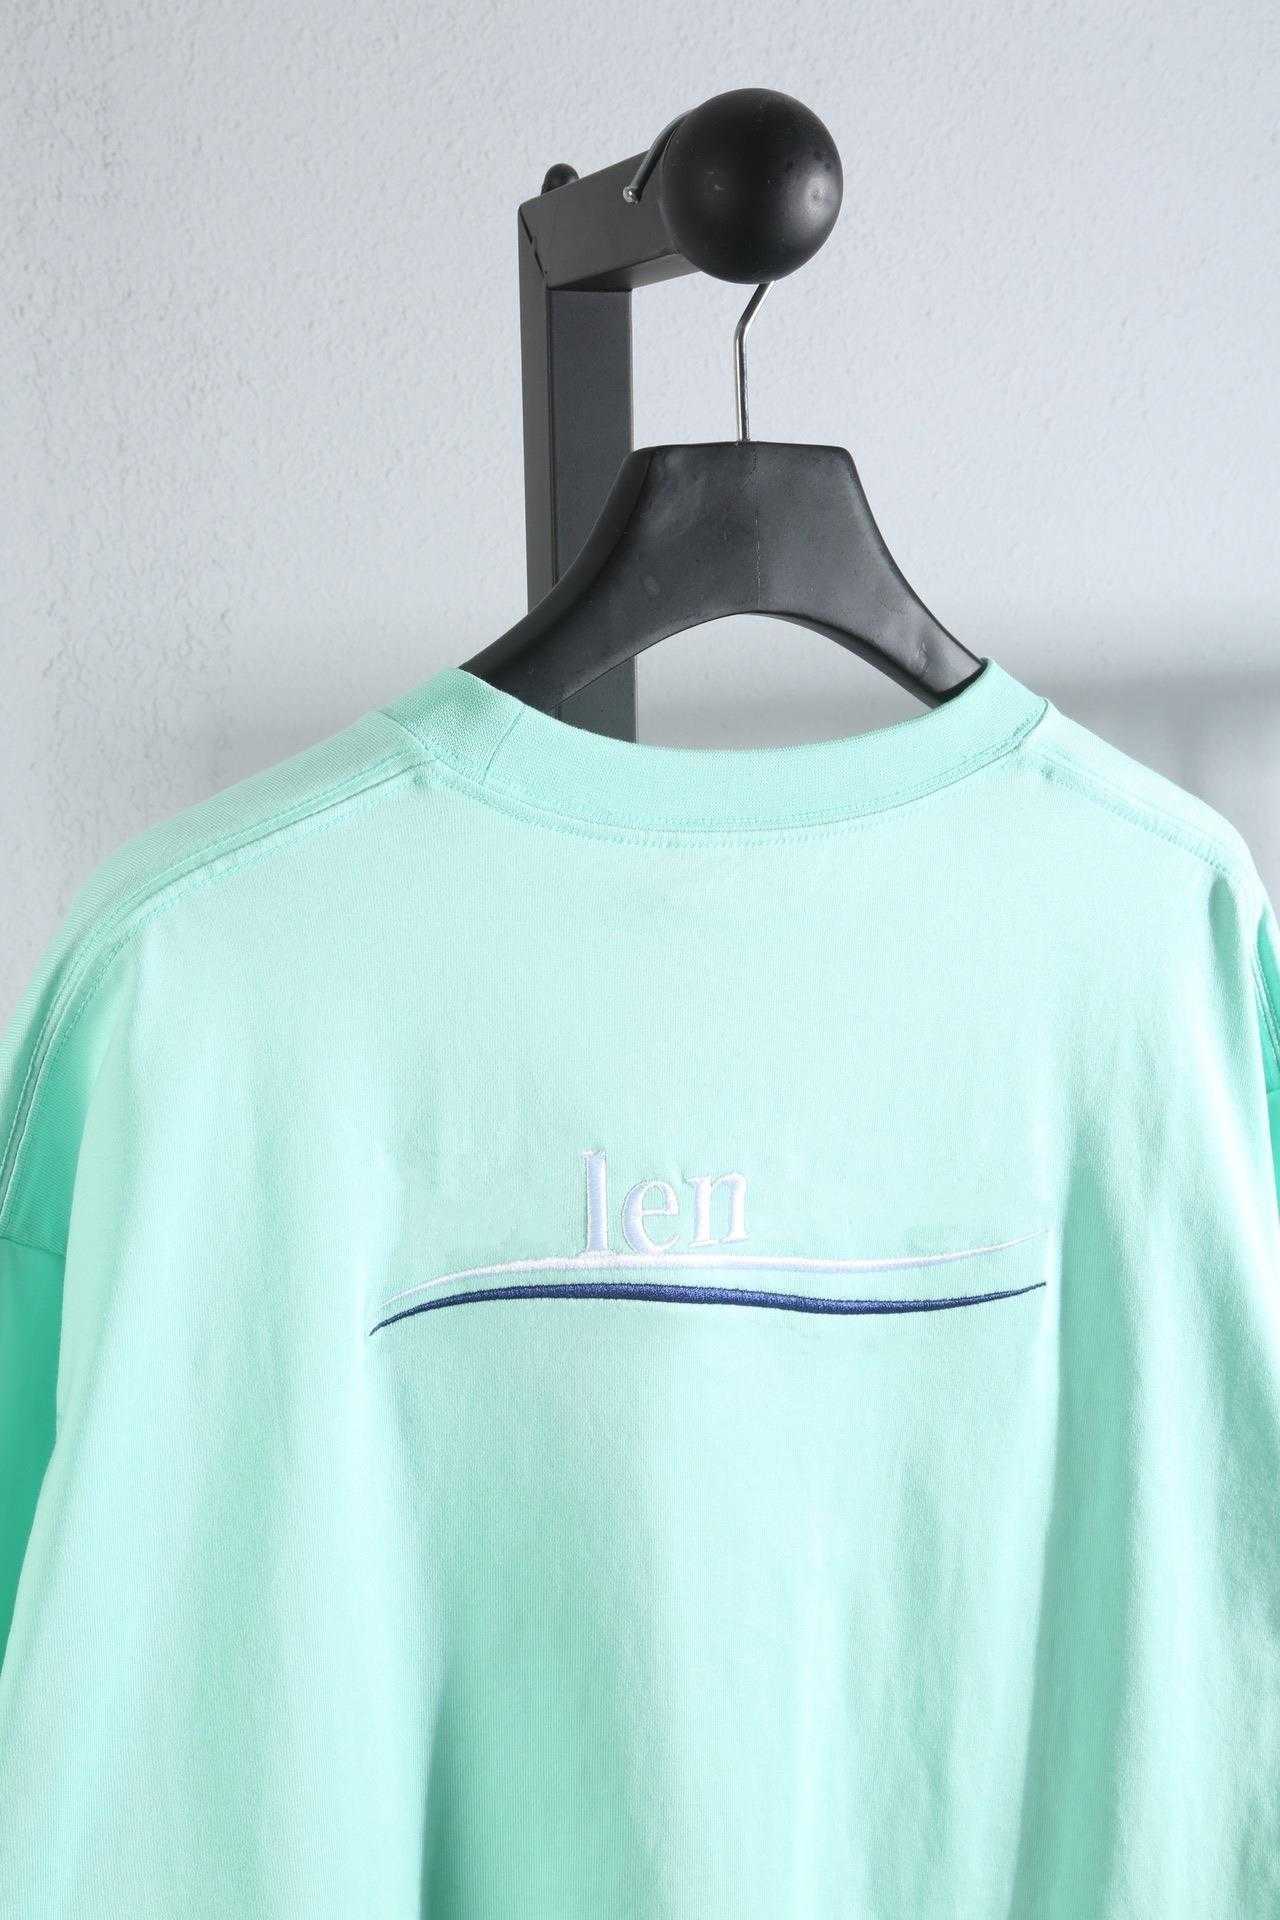 Designer-Sommer-Frauen-T-Shirt Shirt High Edition Koks-Stickerei-Ärmel Loose Fit Unisex-T-Shirt Lässig Vielseitig Frühling/Sommer